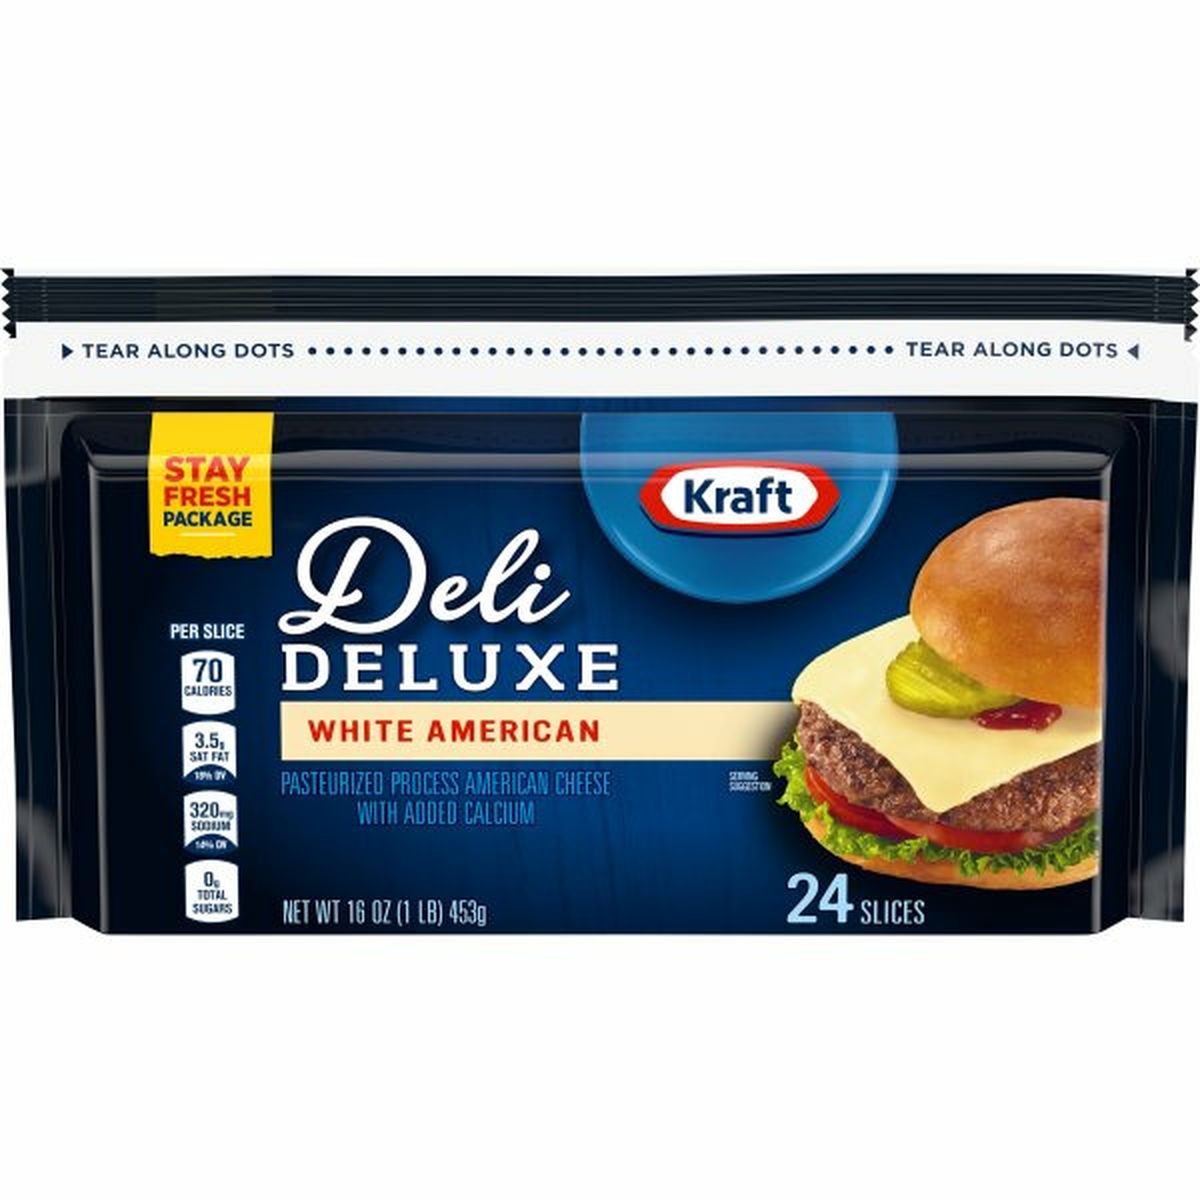 Calories in Kraft Deli Deluxe Deli Deluxe White American Cheese Slices